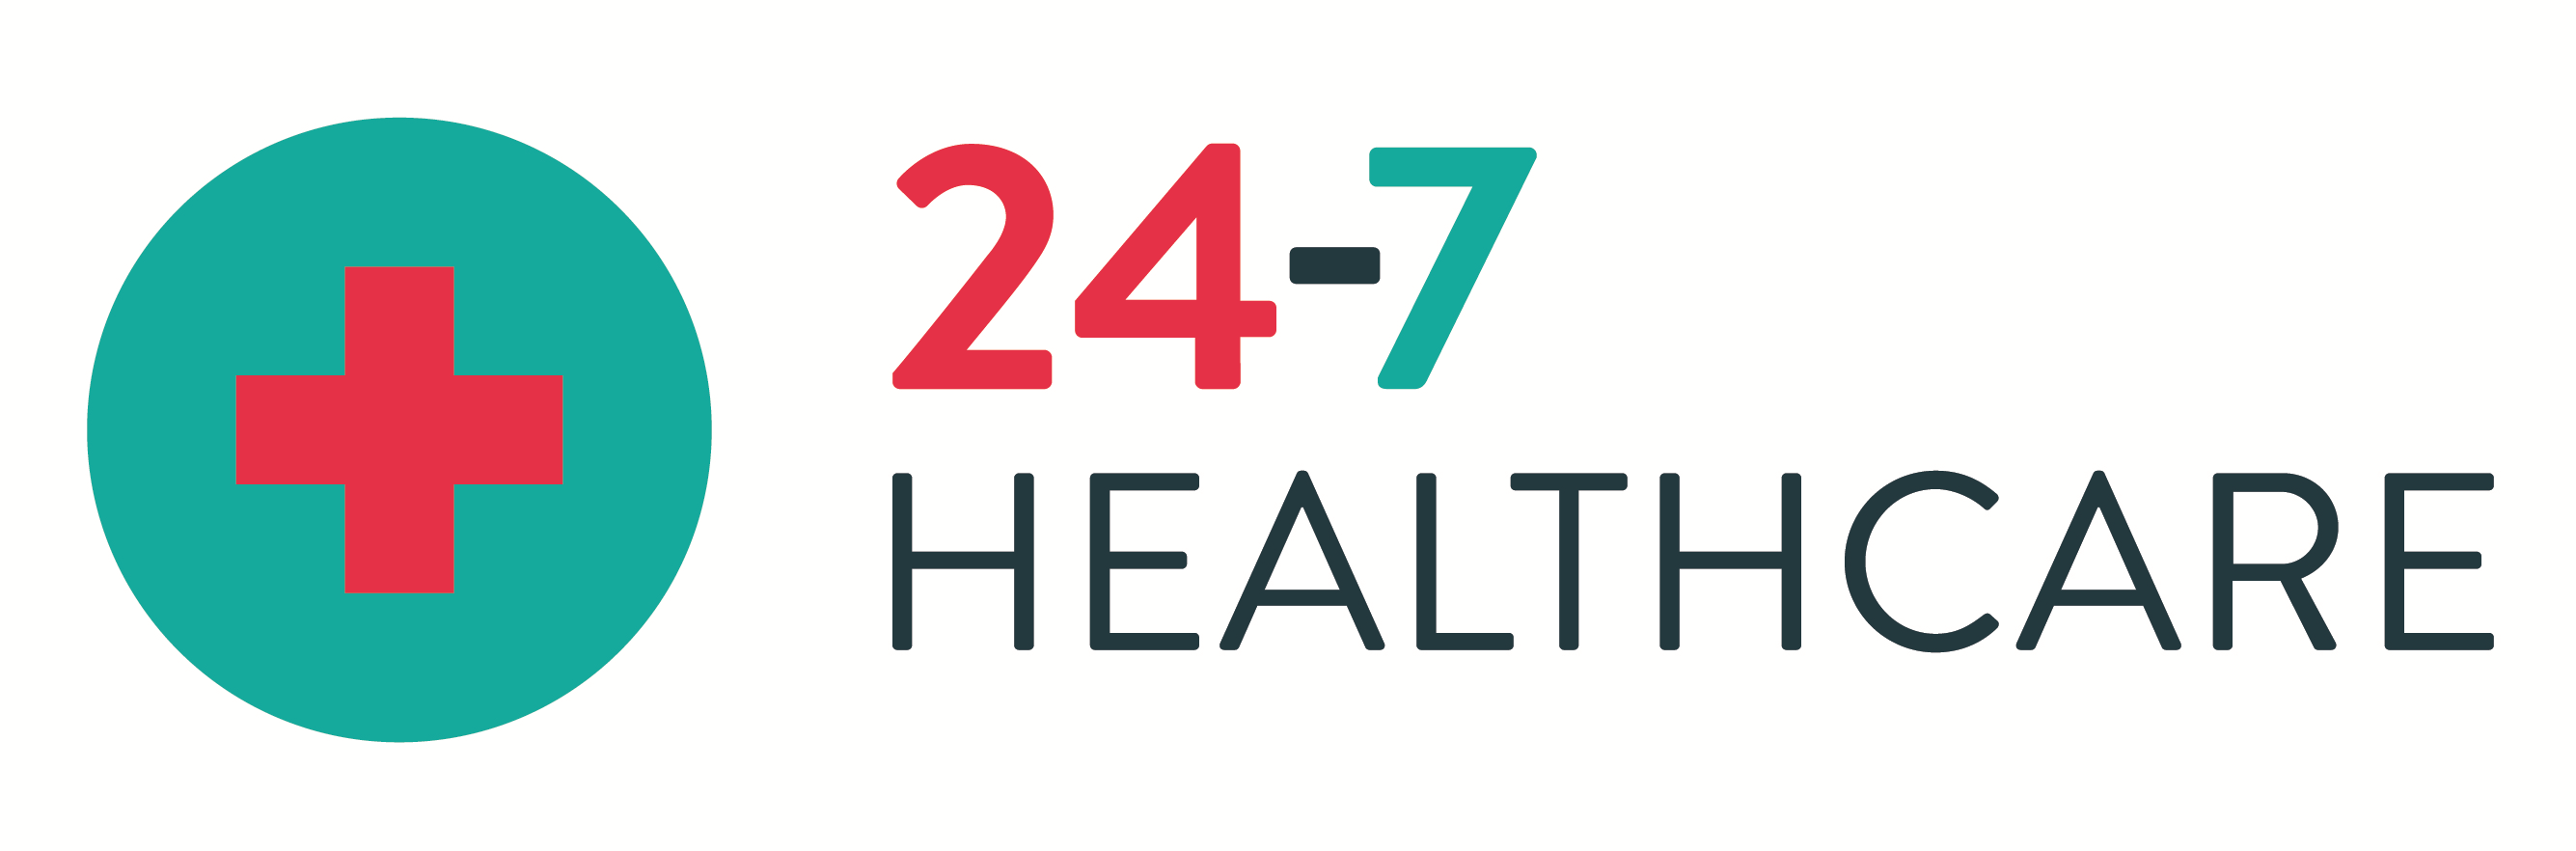 24 7 Healthcare